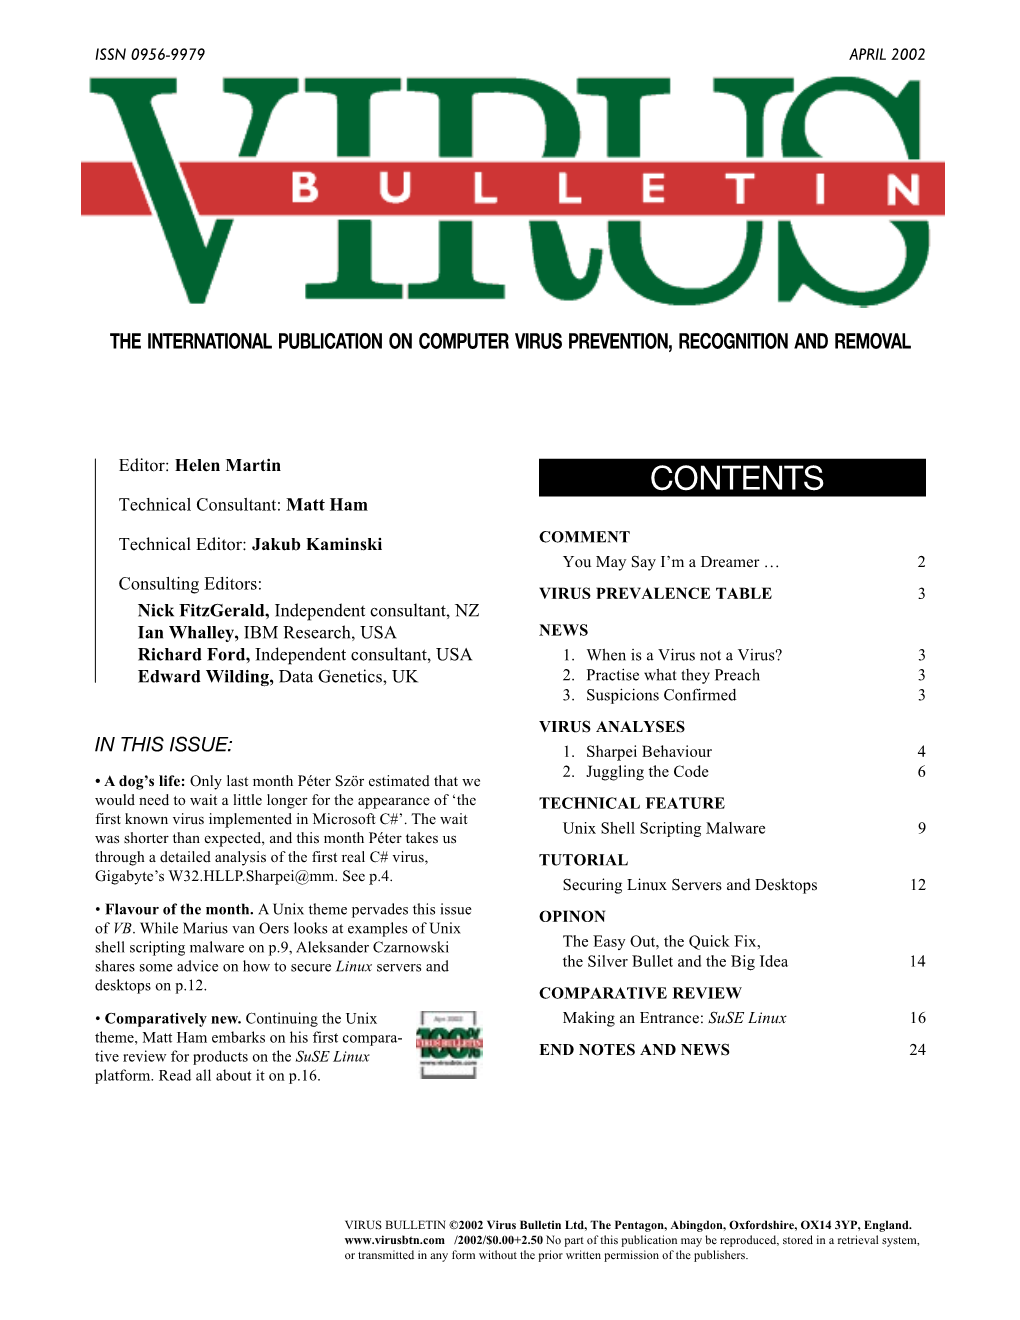 Virus Bulletin, April 2002